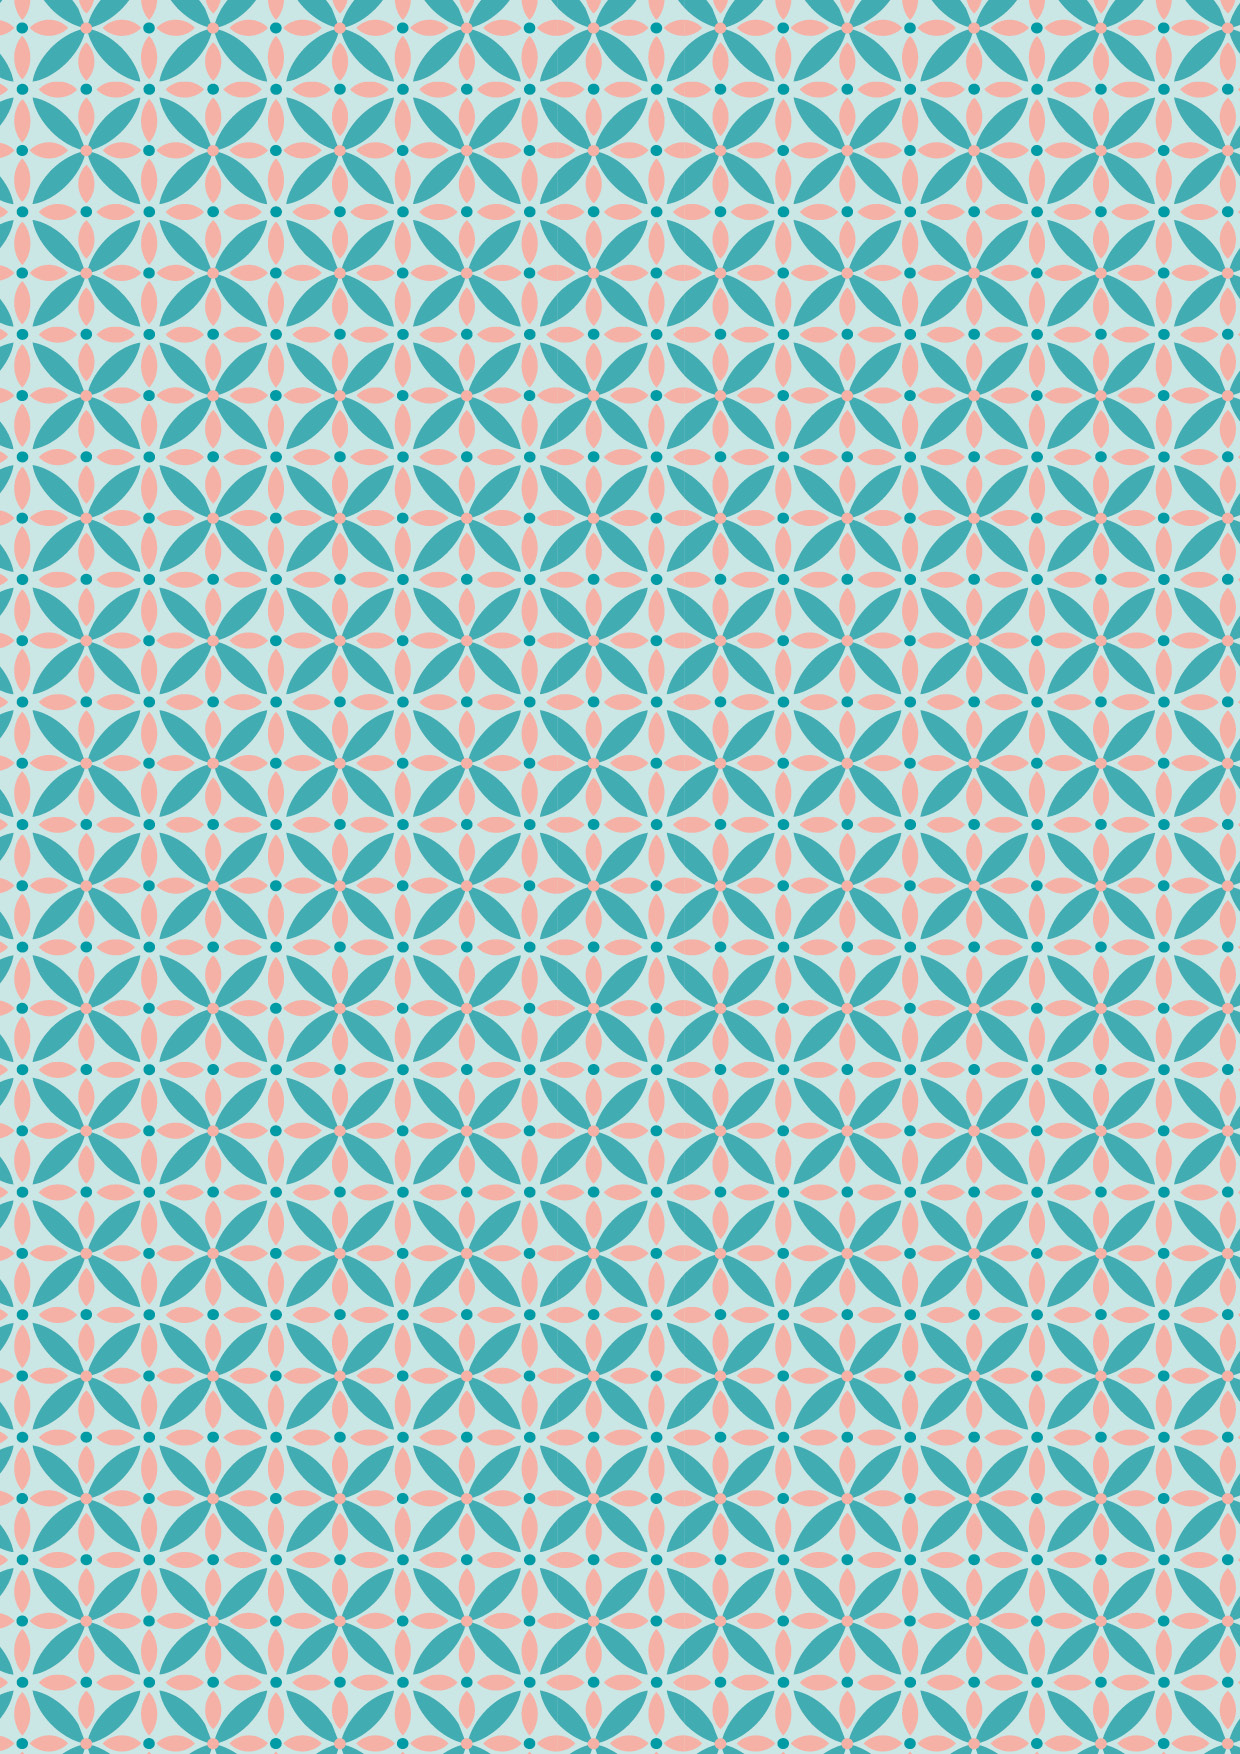 Wrapping paper - Toni Starck Pattern - Candy Jade